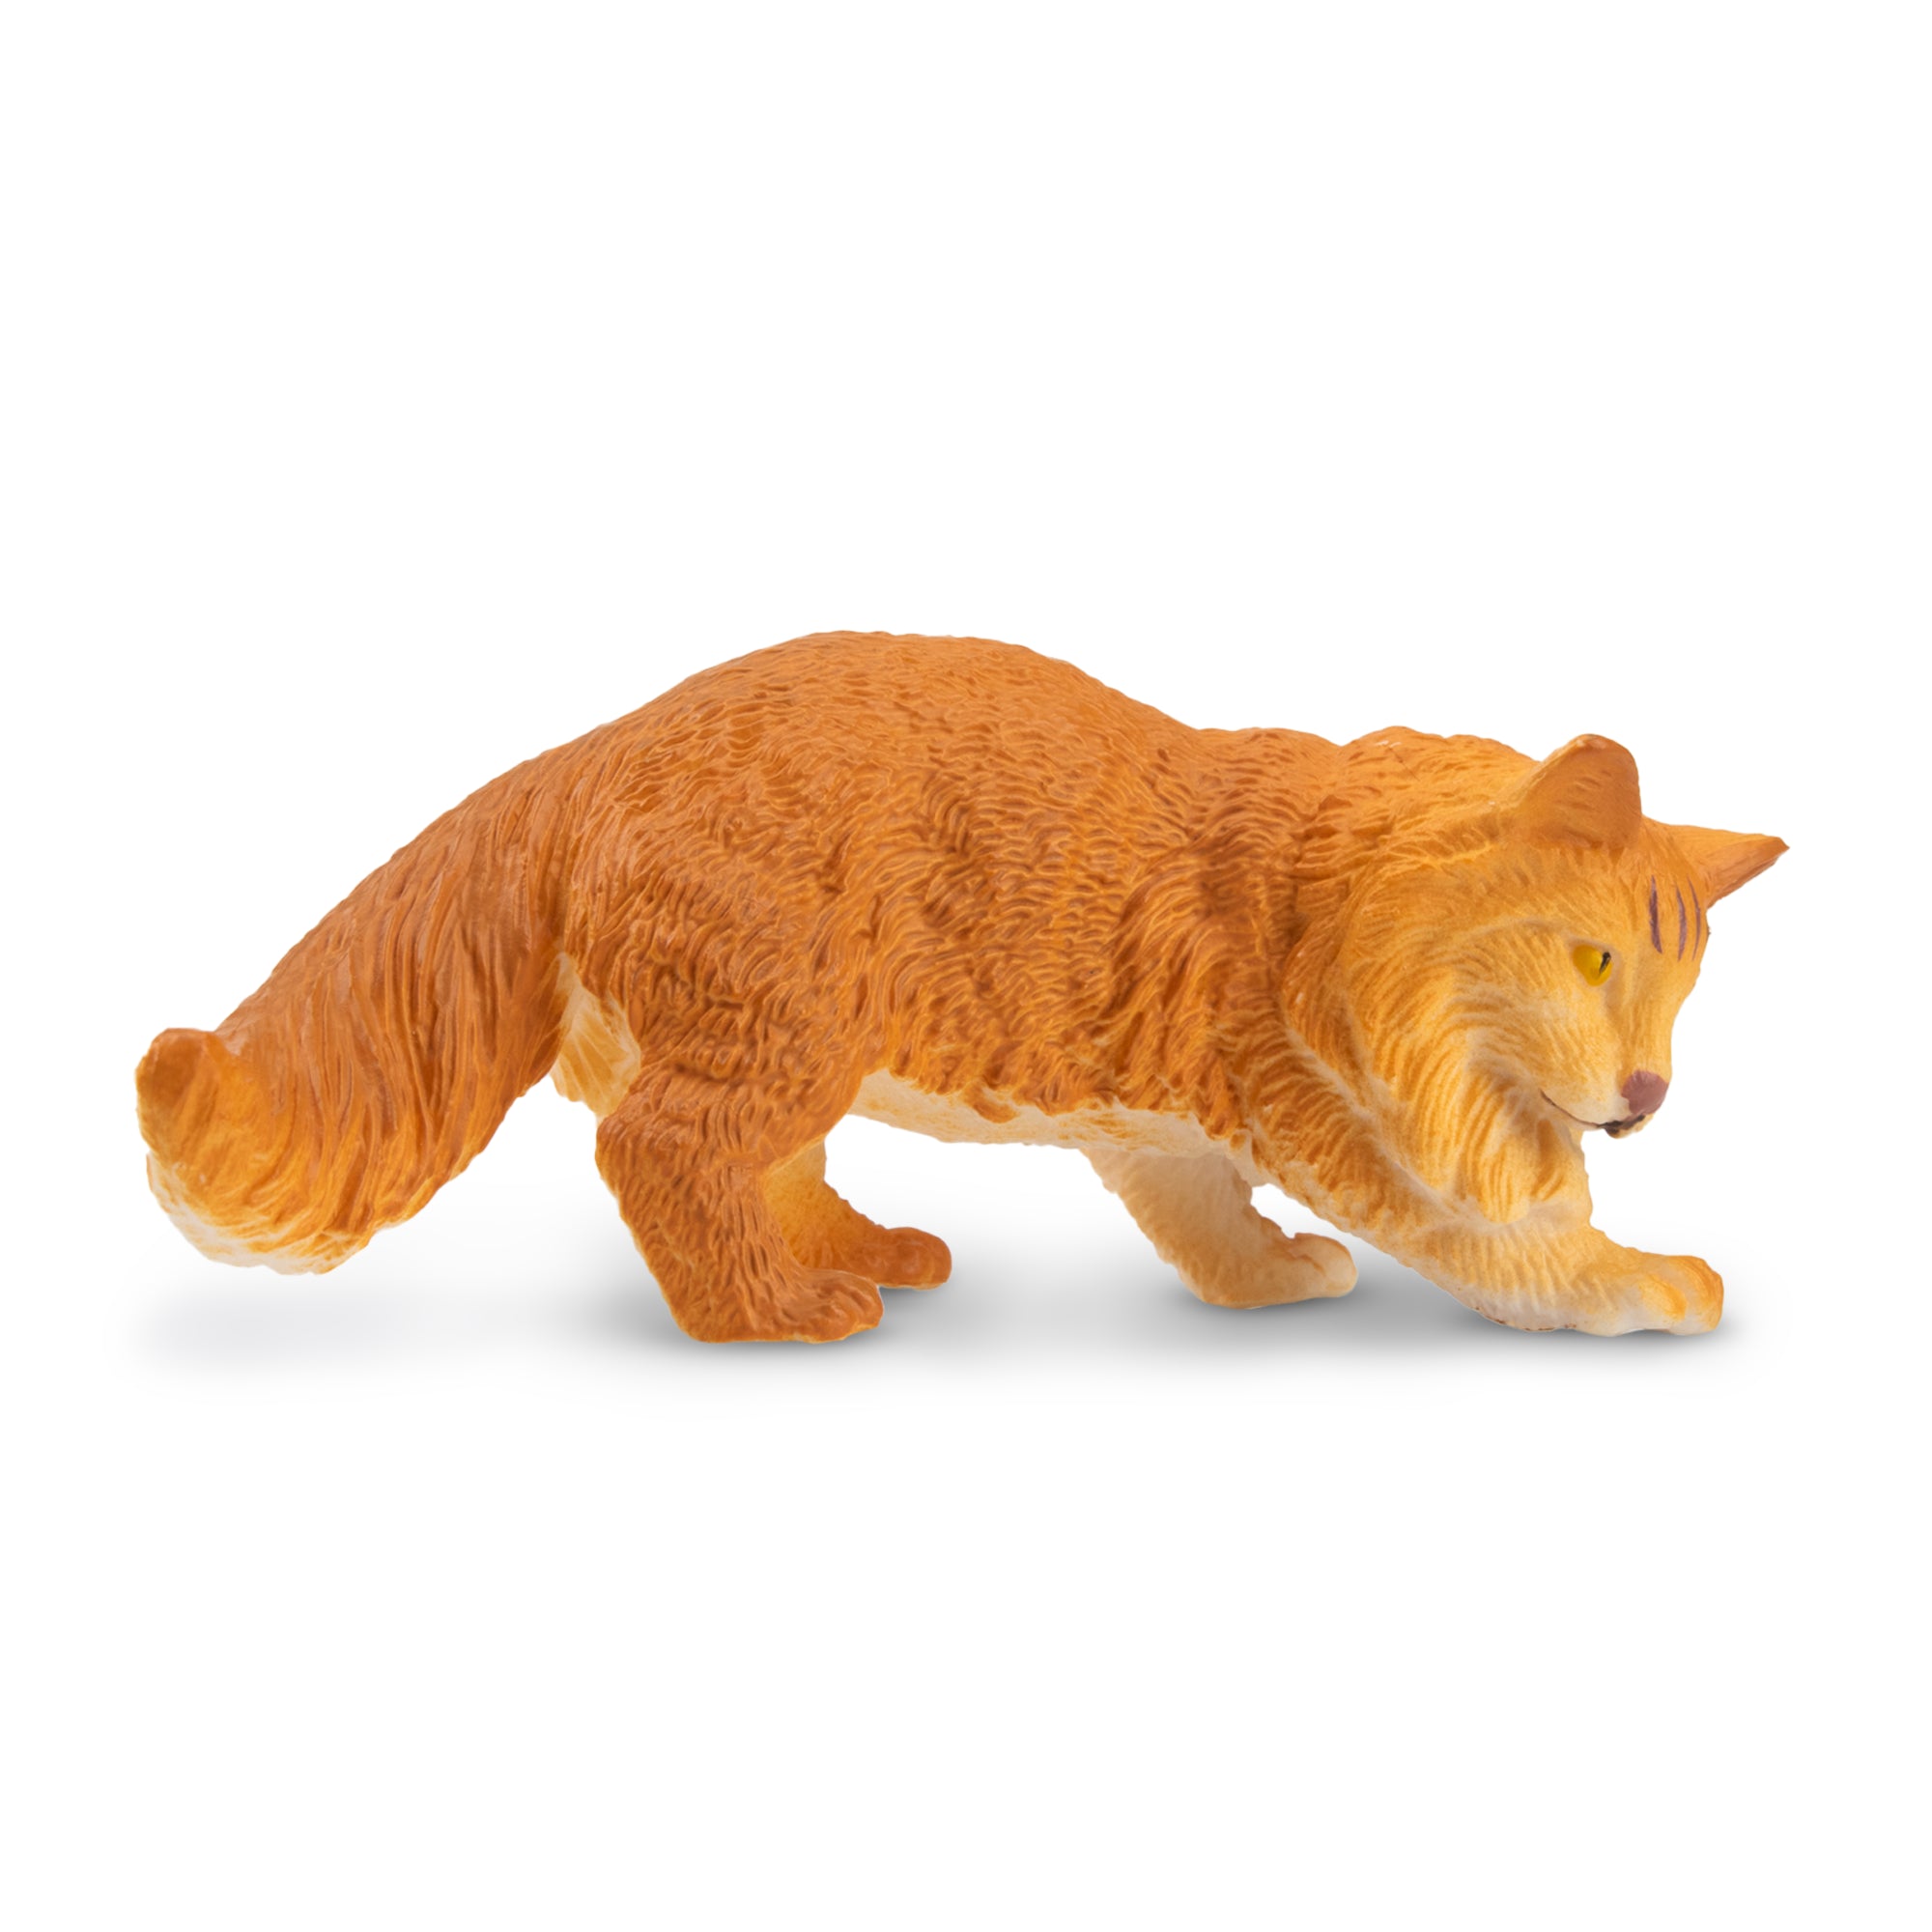 Toymany Orange Norwegian Forest Cat Figurine Toy